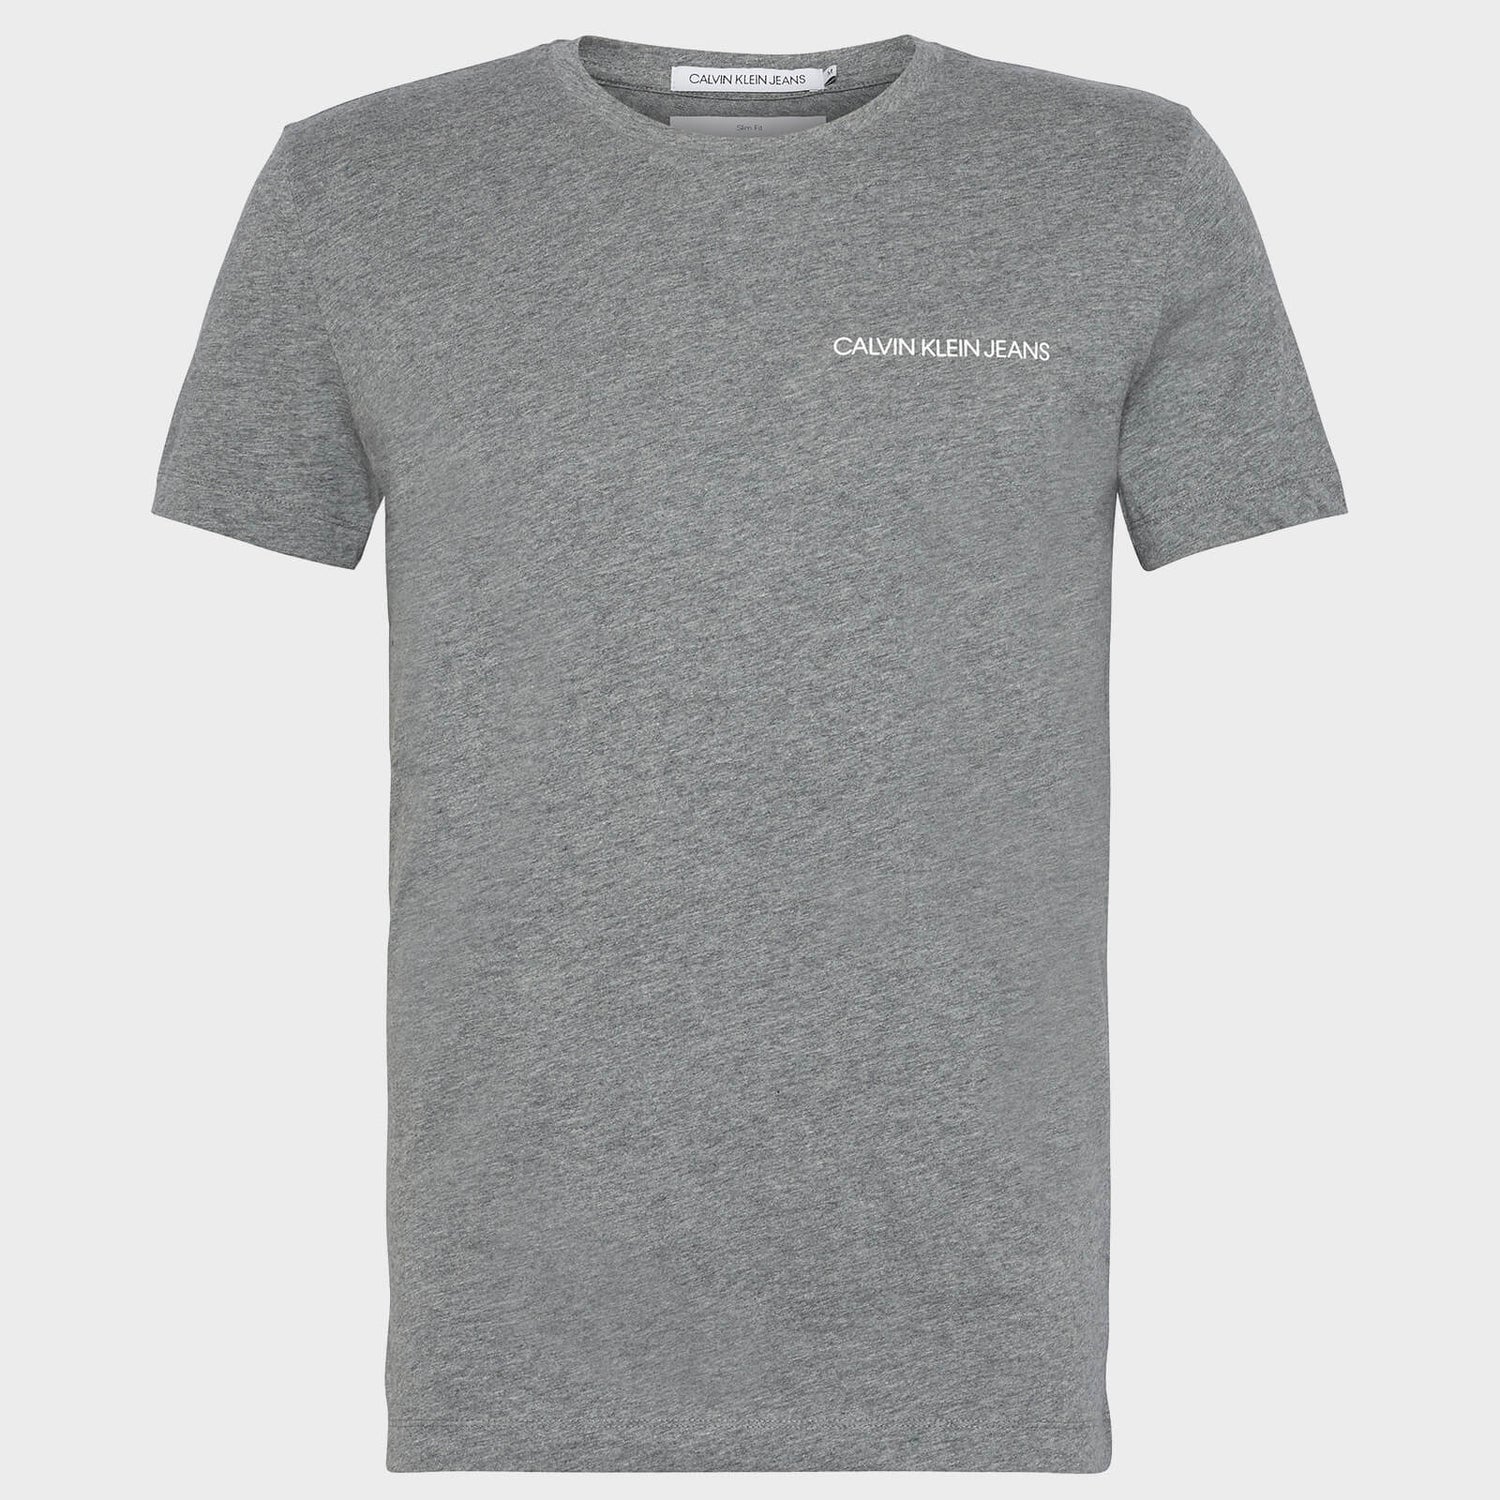 Calvin Klein Jeans Men's Institutional Logo T-Shirt - Grey Heather